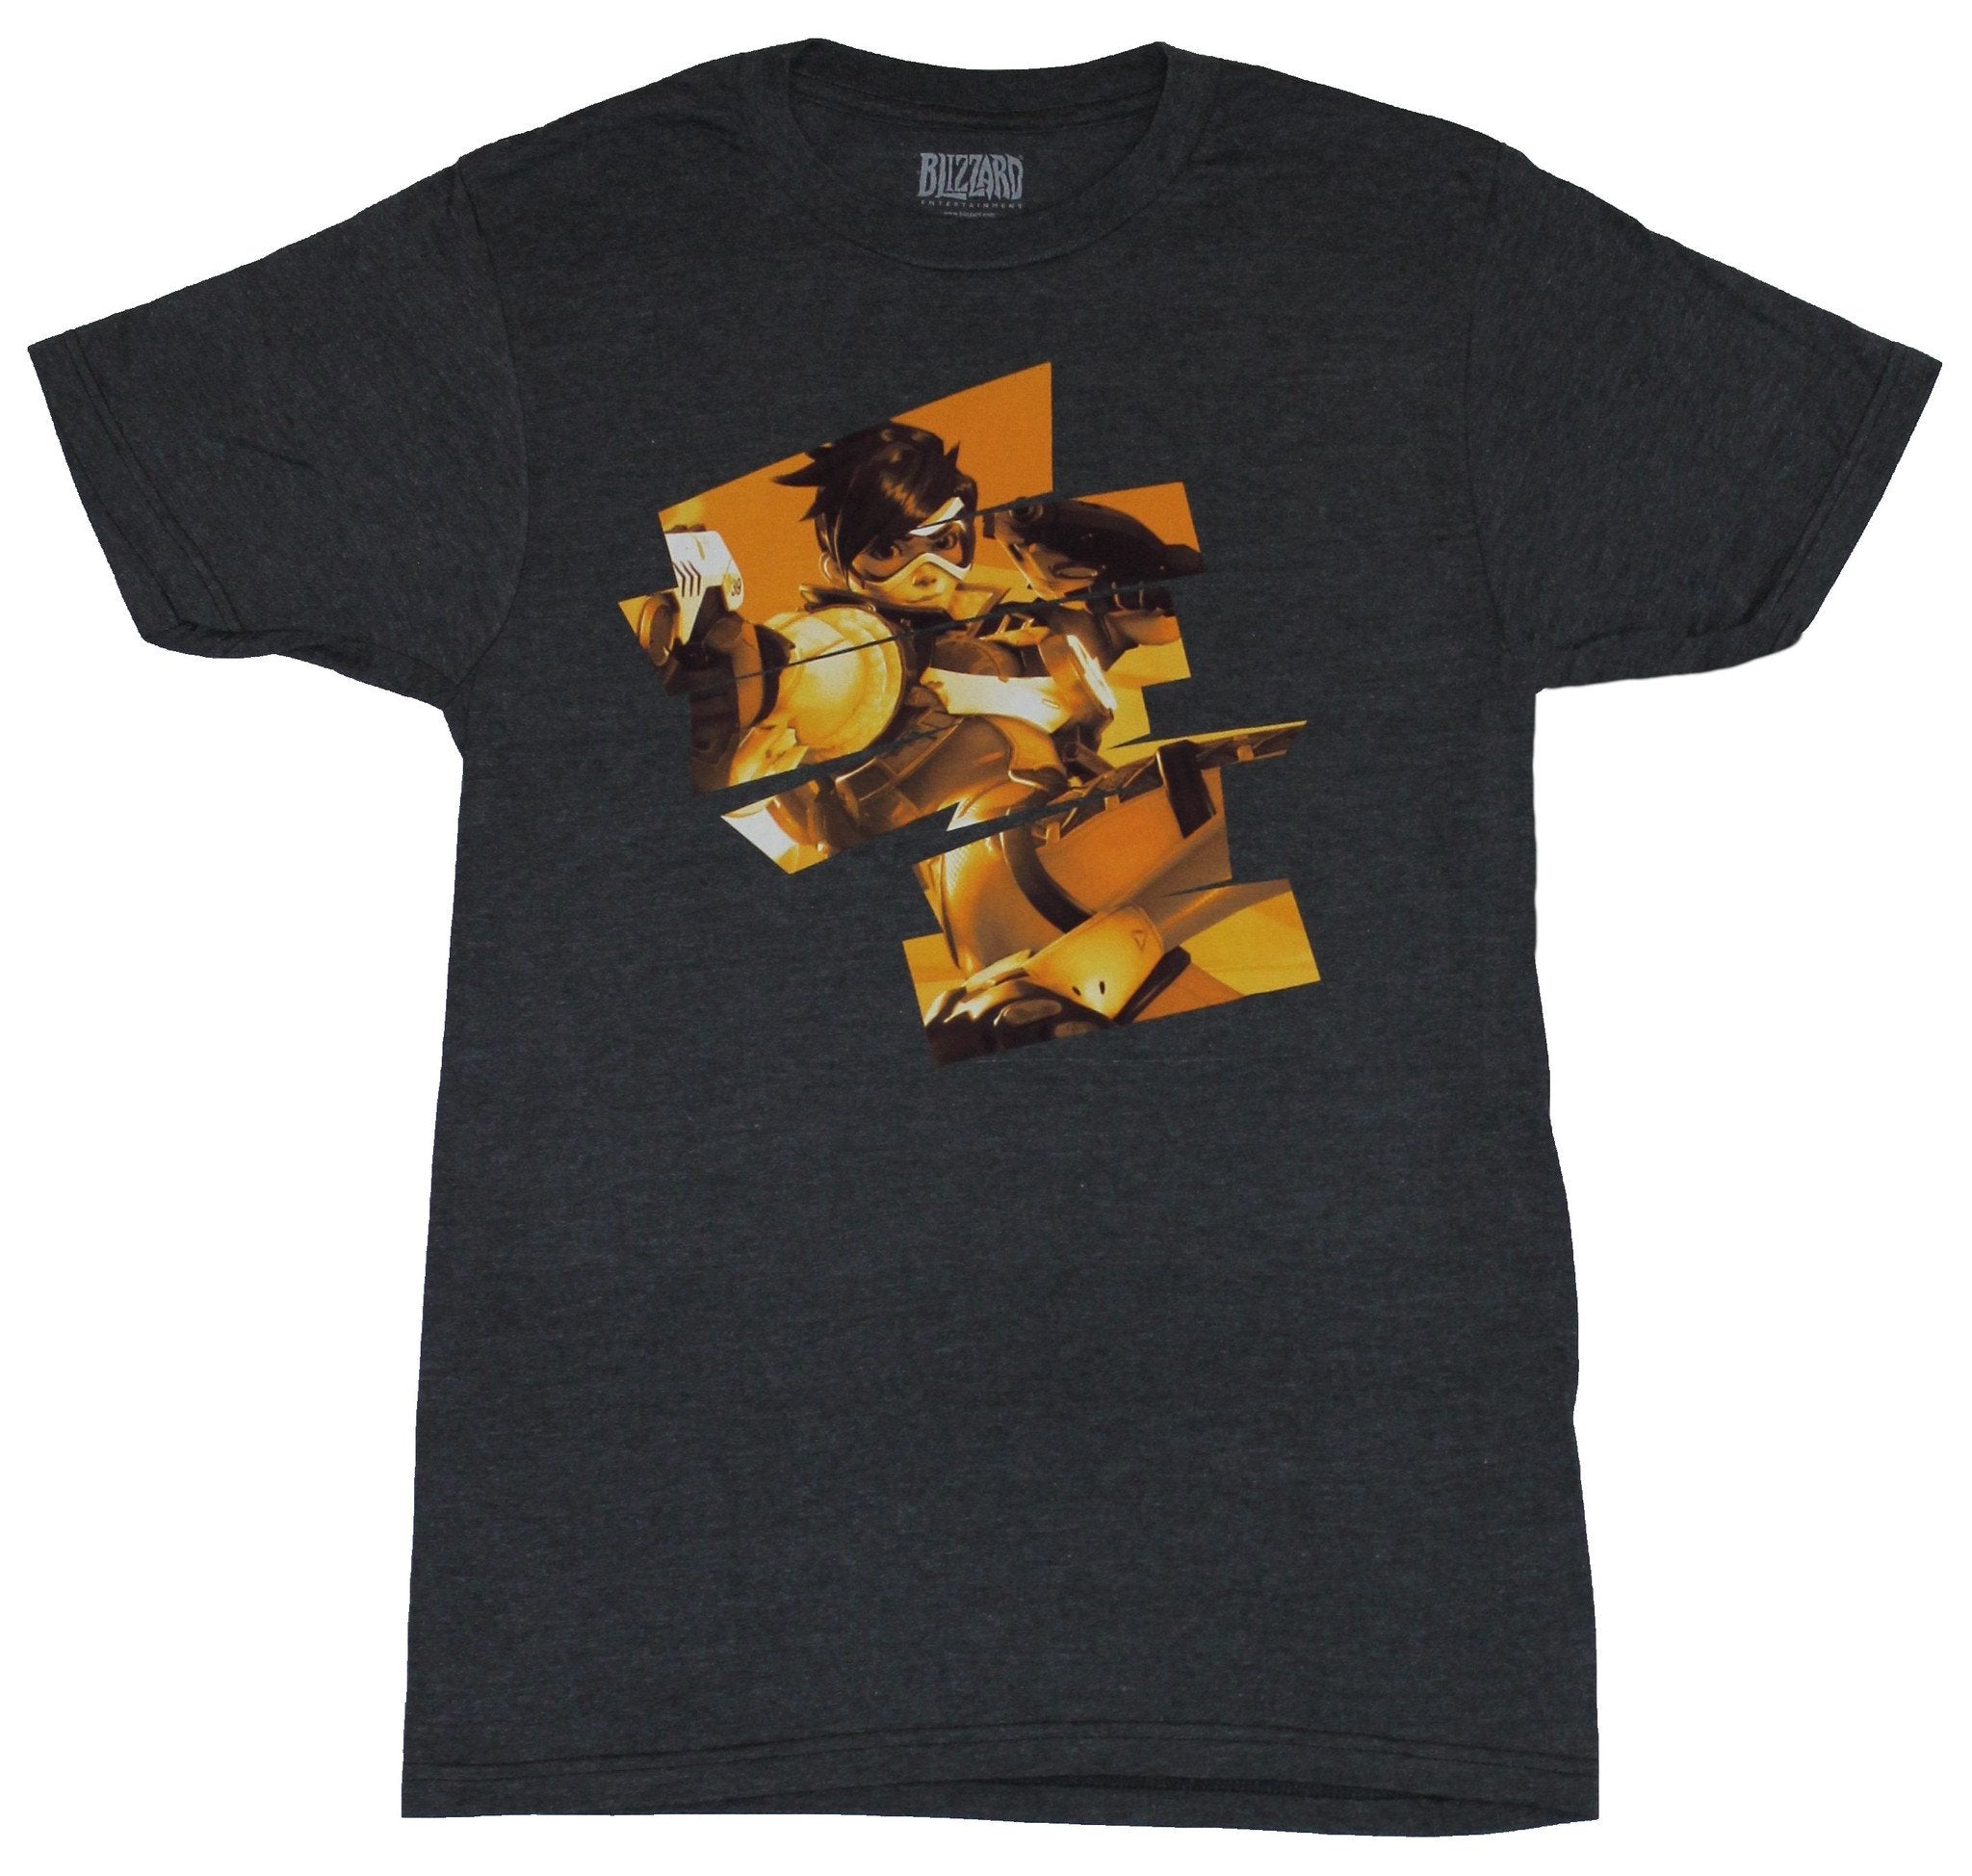 Overwatch Mens T-Shirt - Cheers Love Yell Hex Tracer Image